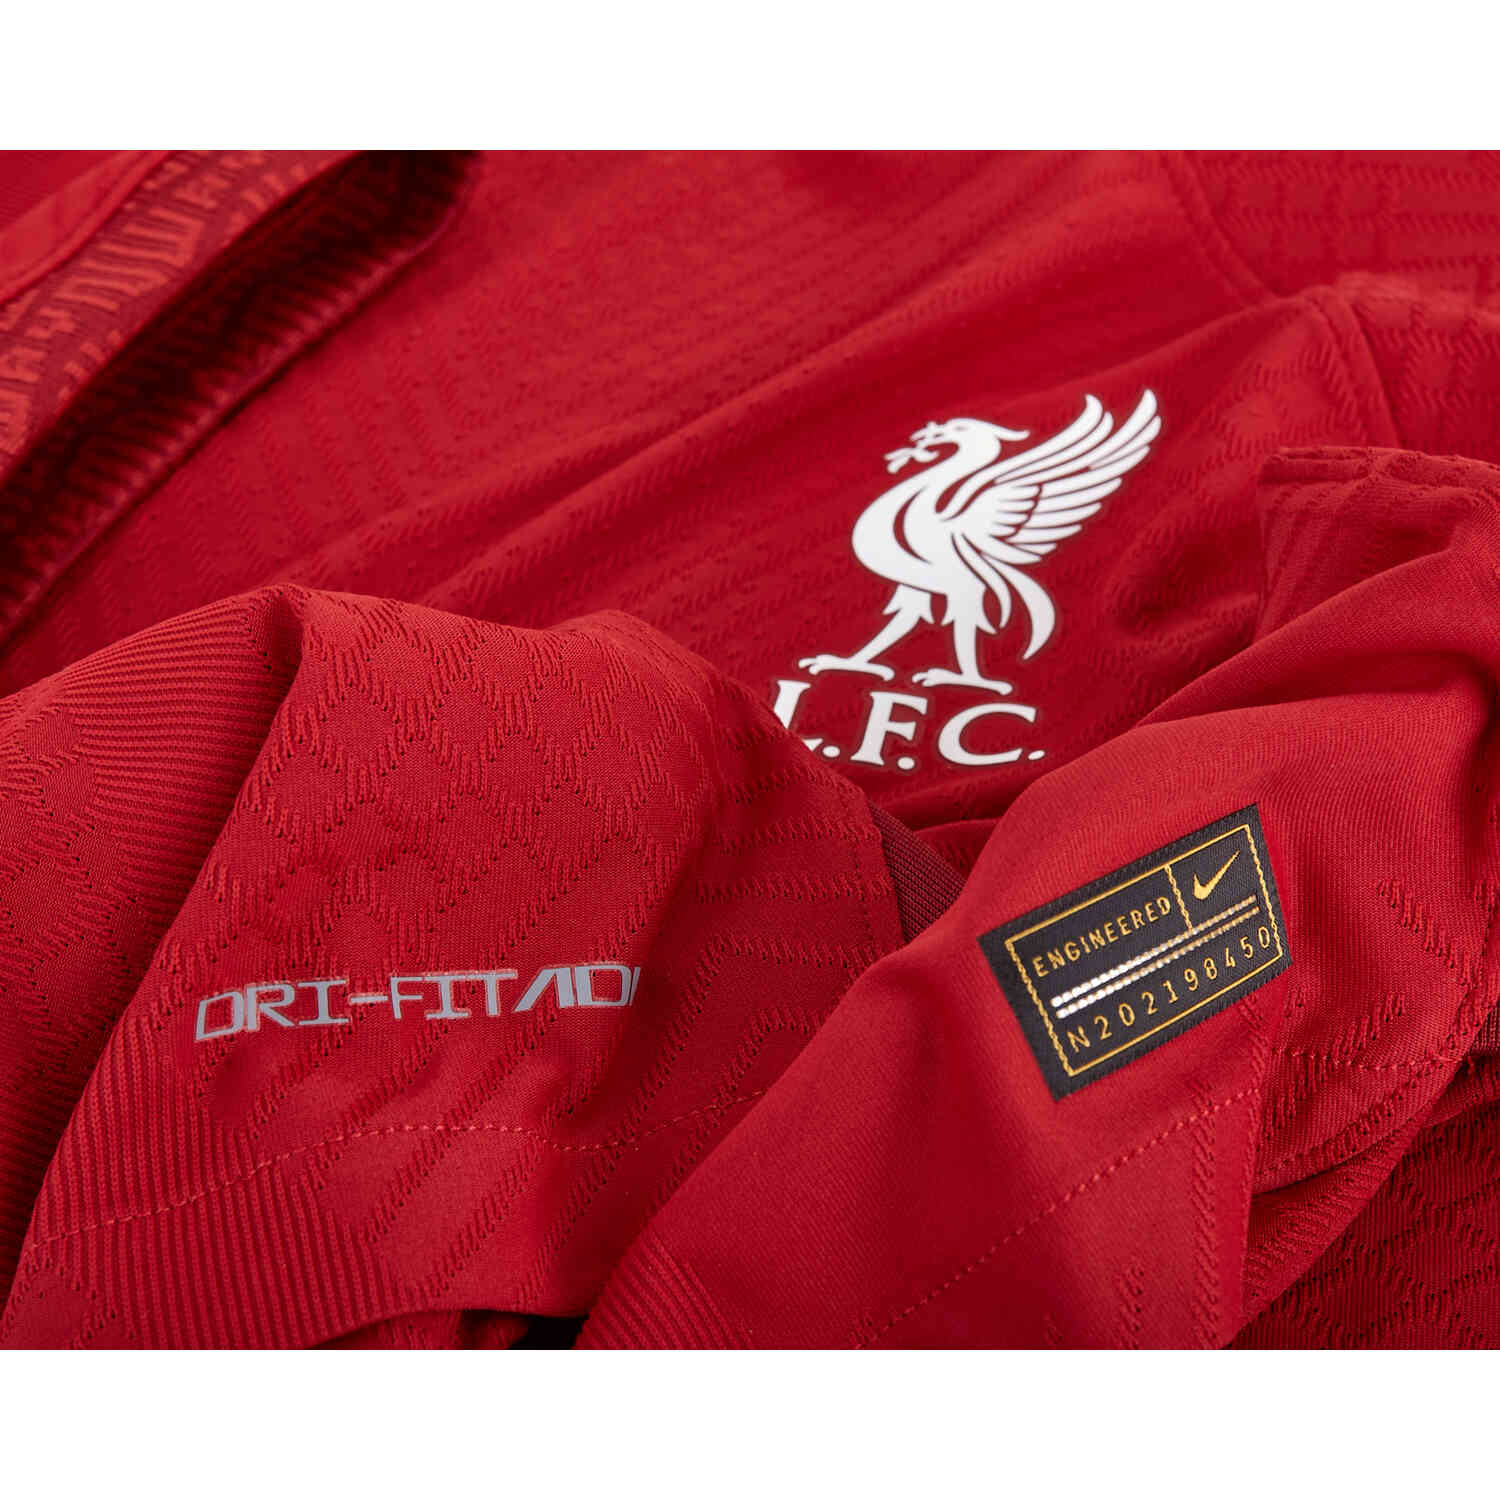 2022/23 Nike Mohamed Salah Liverpool Home Match Jersey - SoccerPro